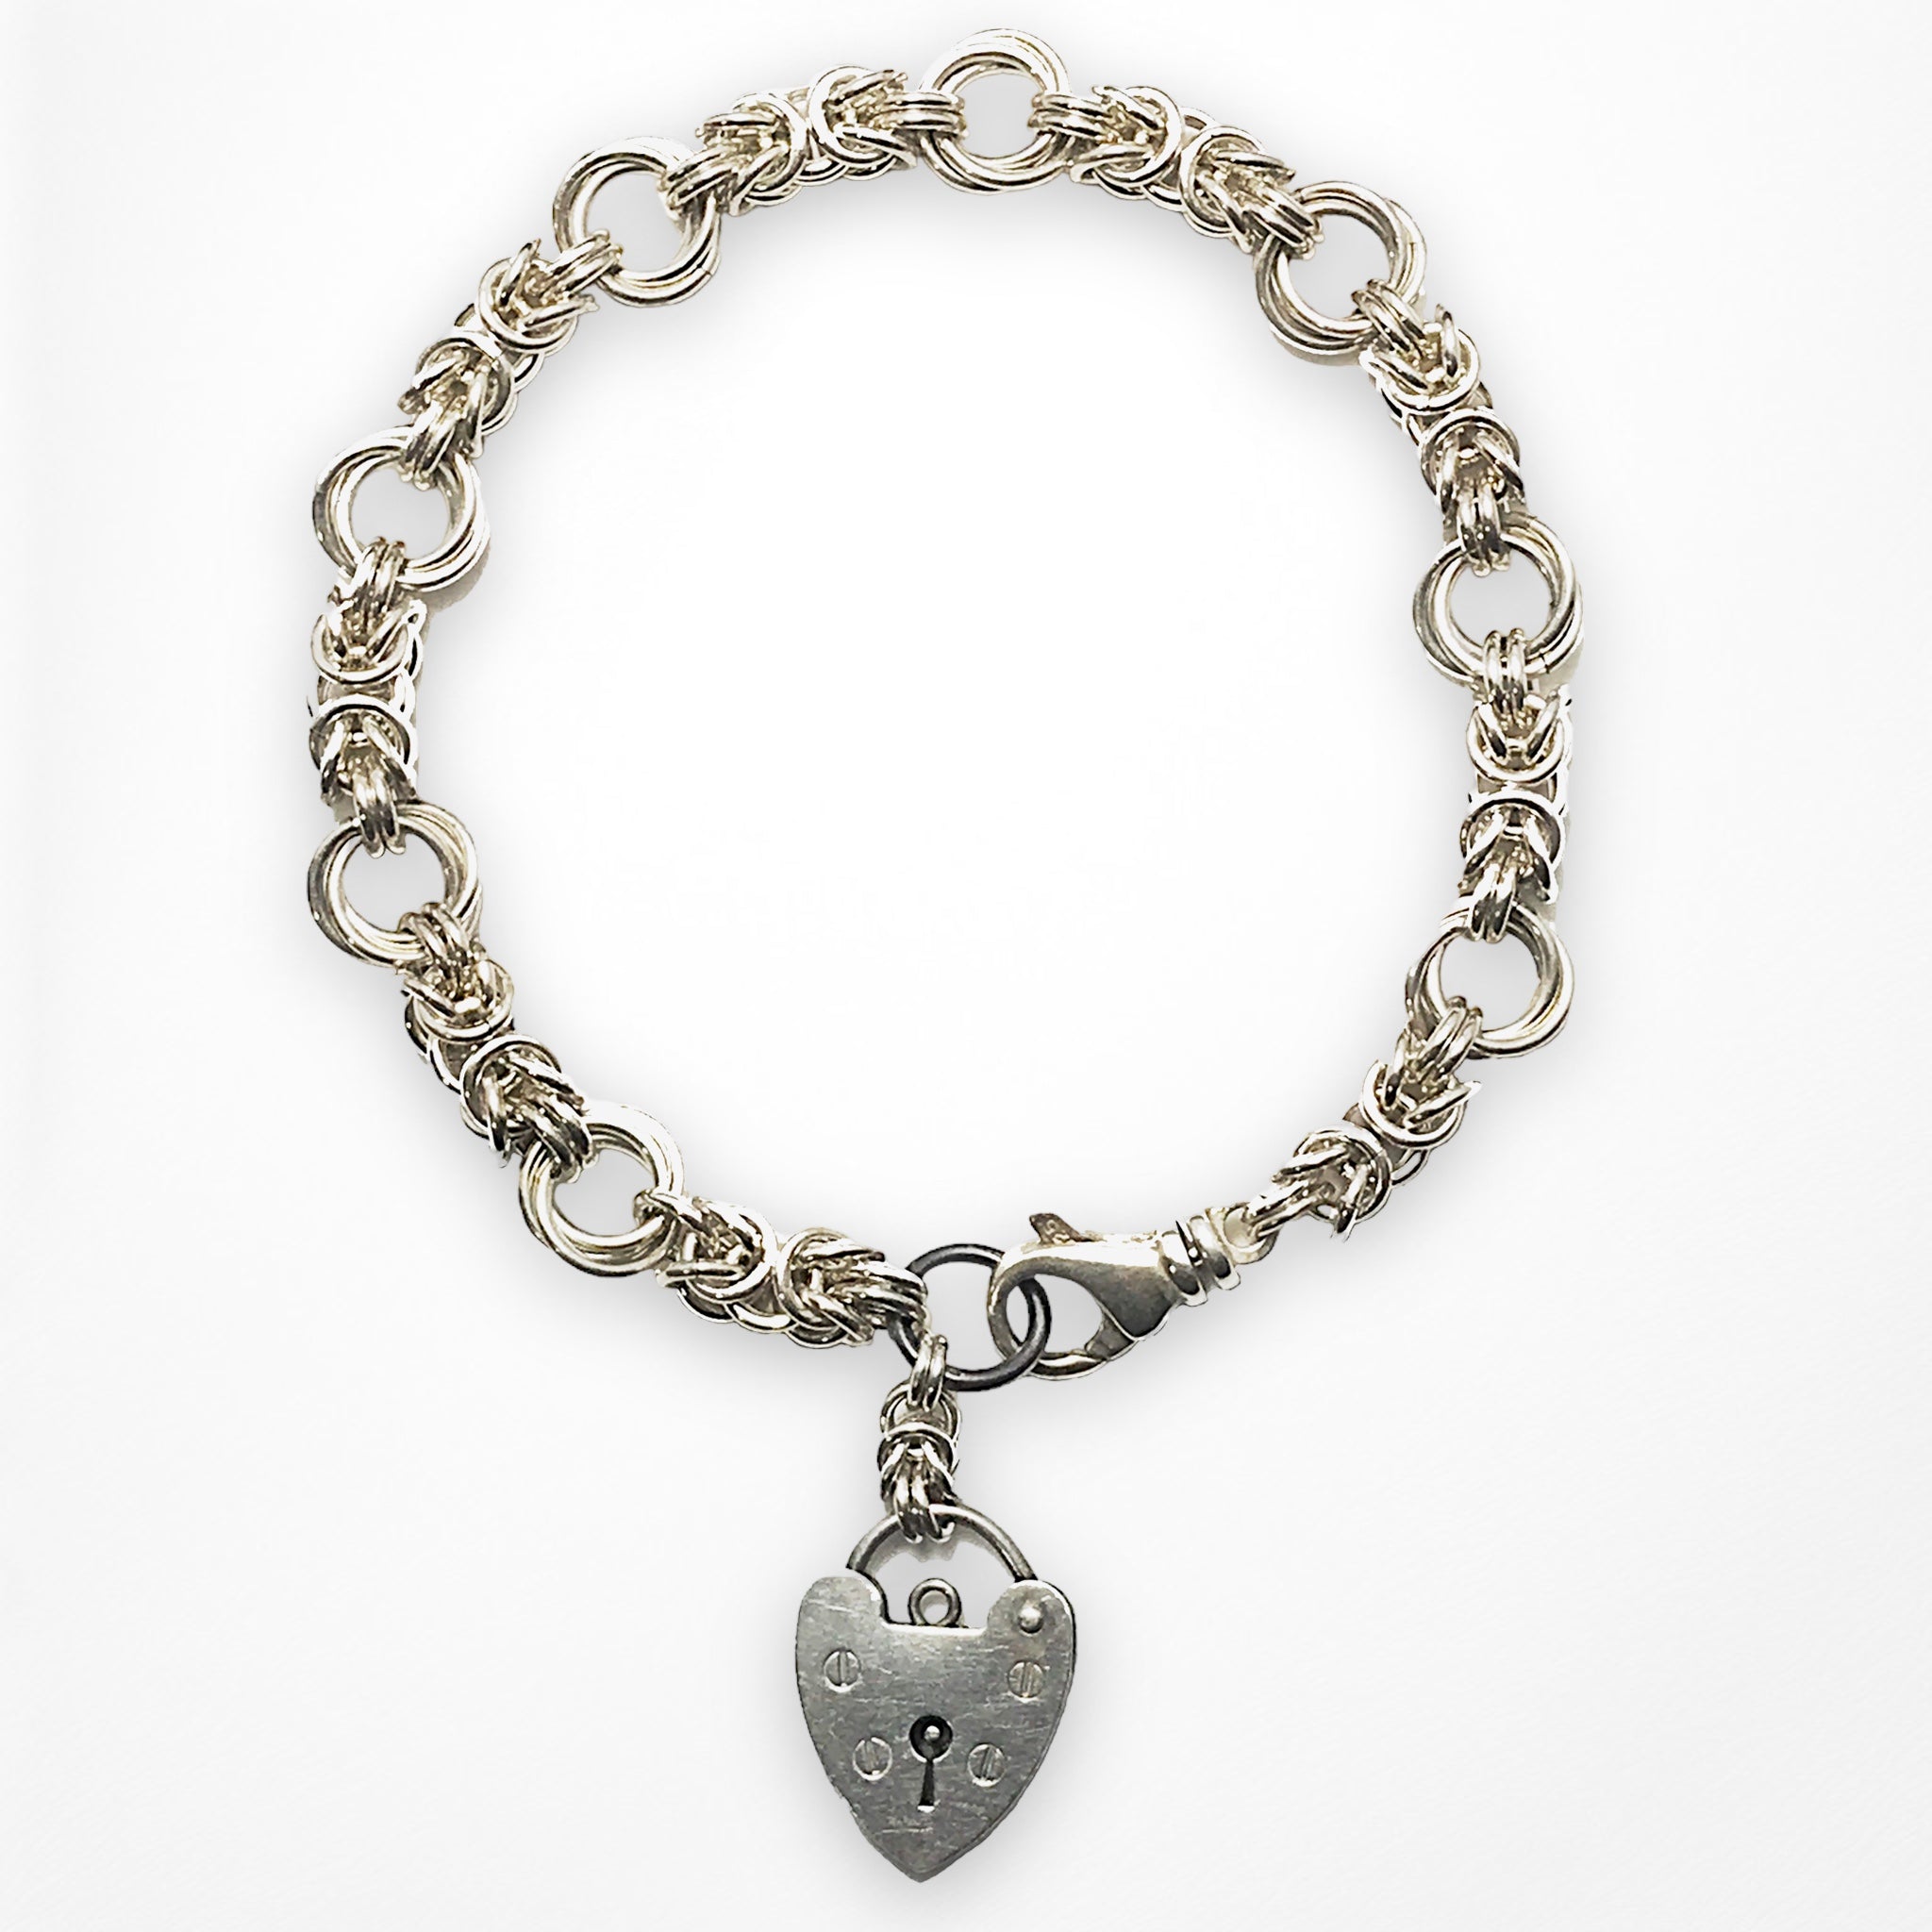 Heart Lock Bracelet Key Necklace For Couple 21.00 https://martjoker.com/ heart-lock-bracelet-key-necklace-for-coup… | Key necklace, Heart lock,  Crystal jewelry sets